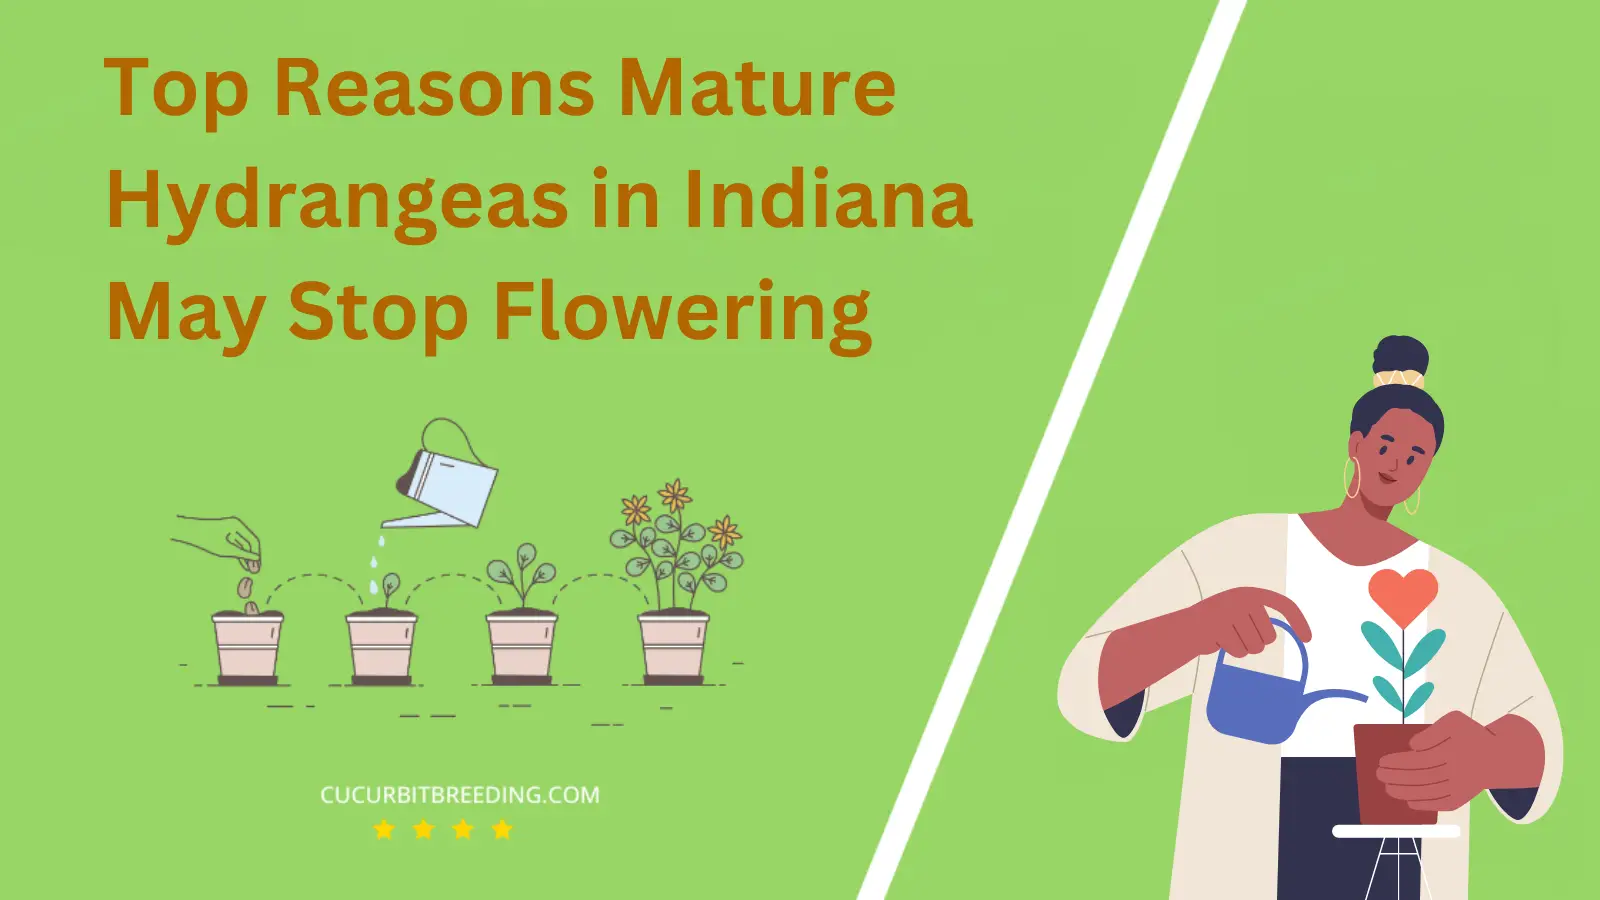 Top Reasons Mature Hydrangeas in Indiana May Stop Flowering